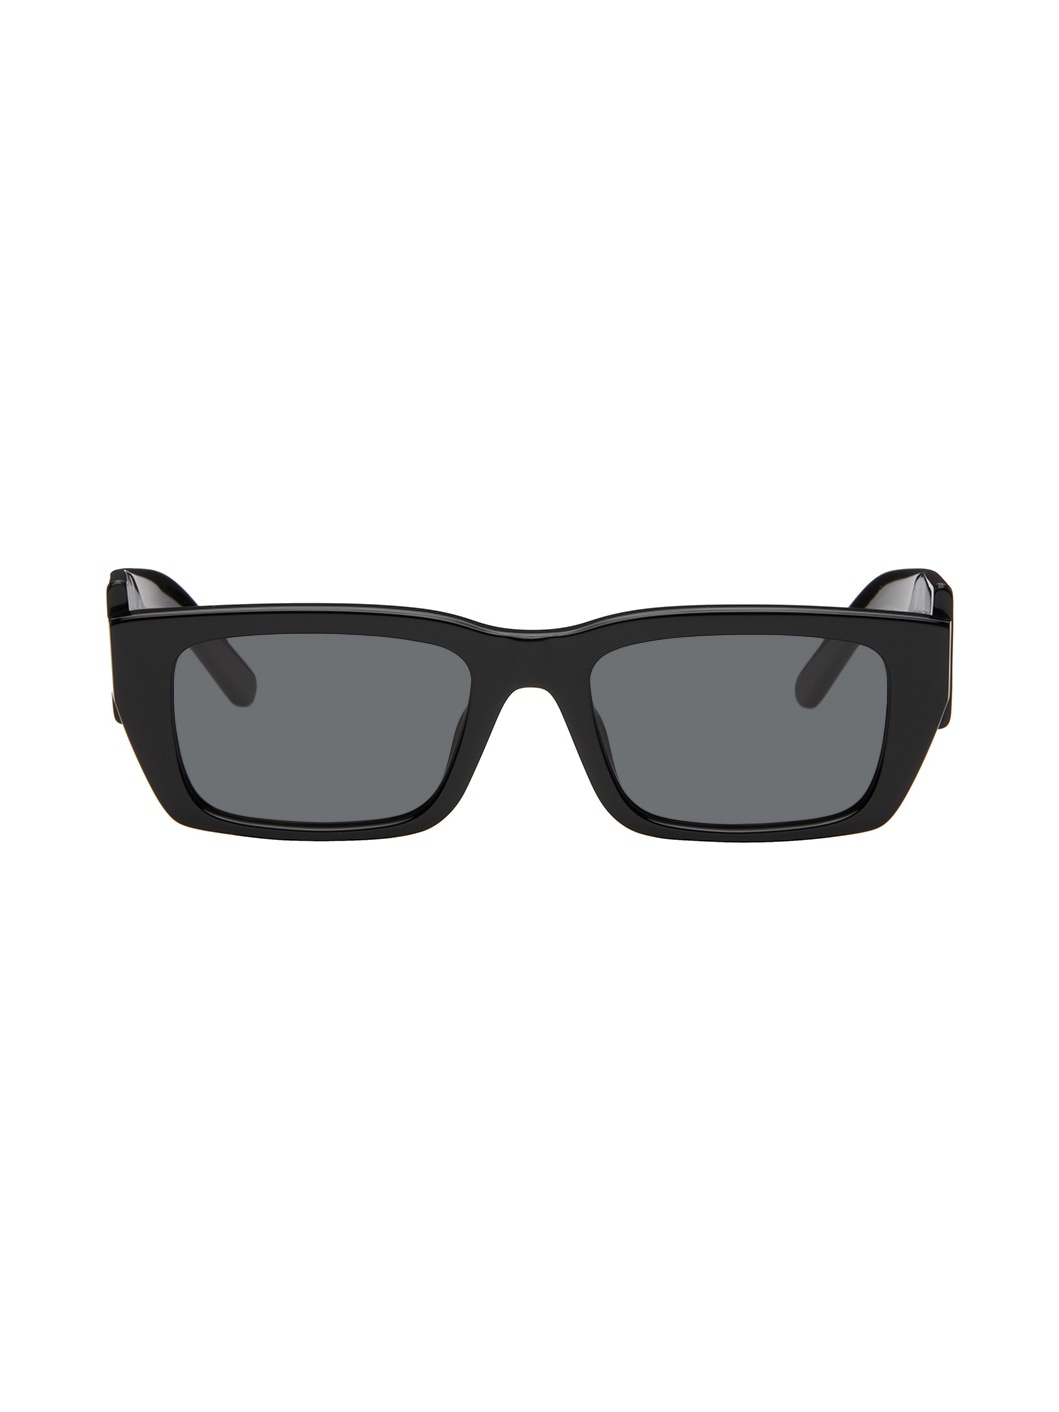 Black Palm Sunglasses - 1